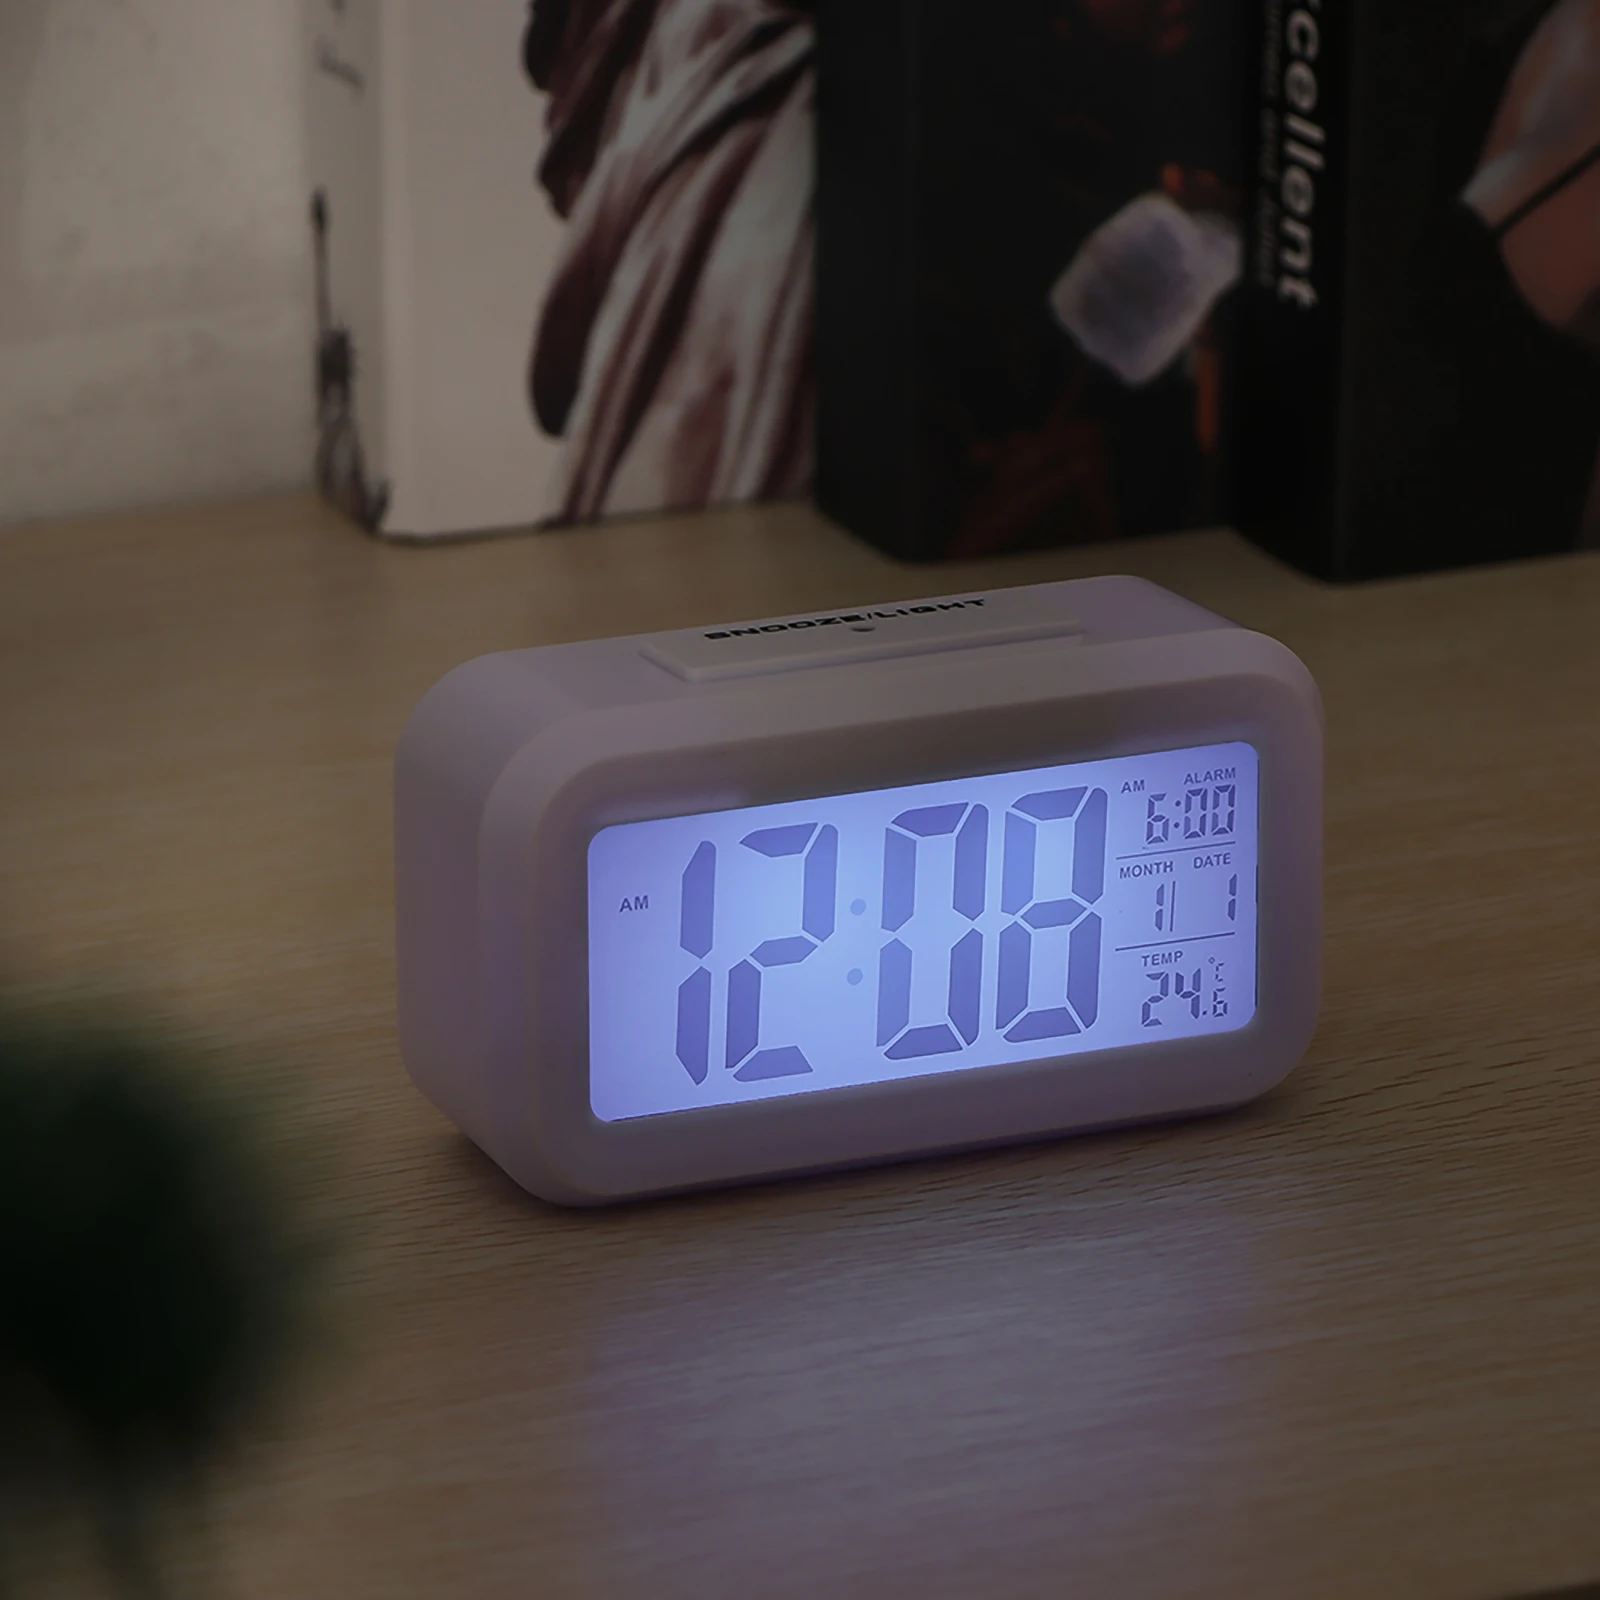 

Digital Backlight Snooze Clock With Nightlight Multifunctional Desktop Alarm Clocks Large LCD Display Thermometer Home Decora